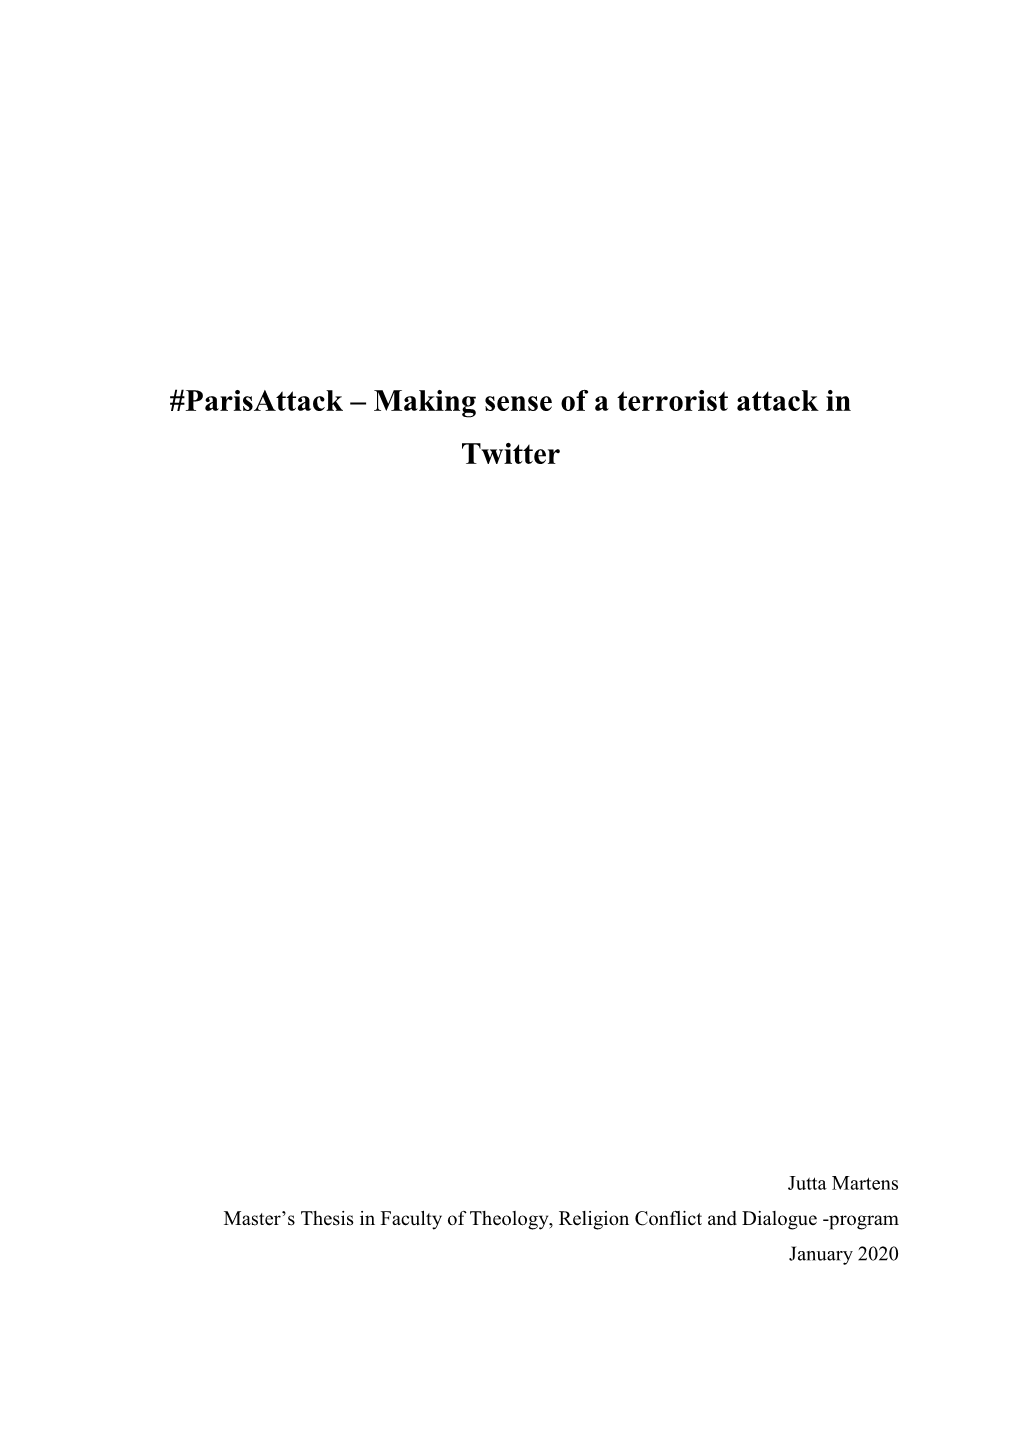 Making Sense of a Terrorist Attack in Twitter